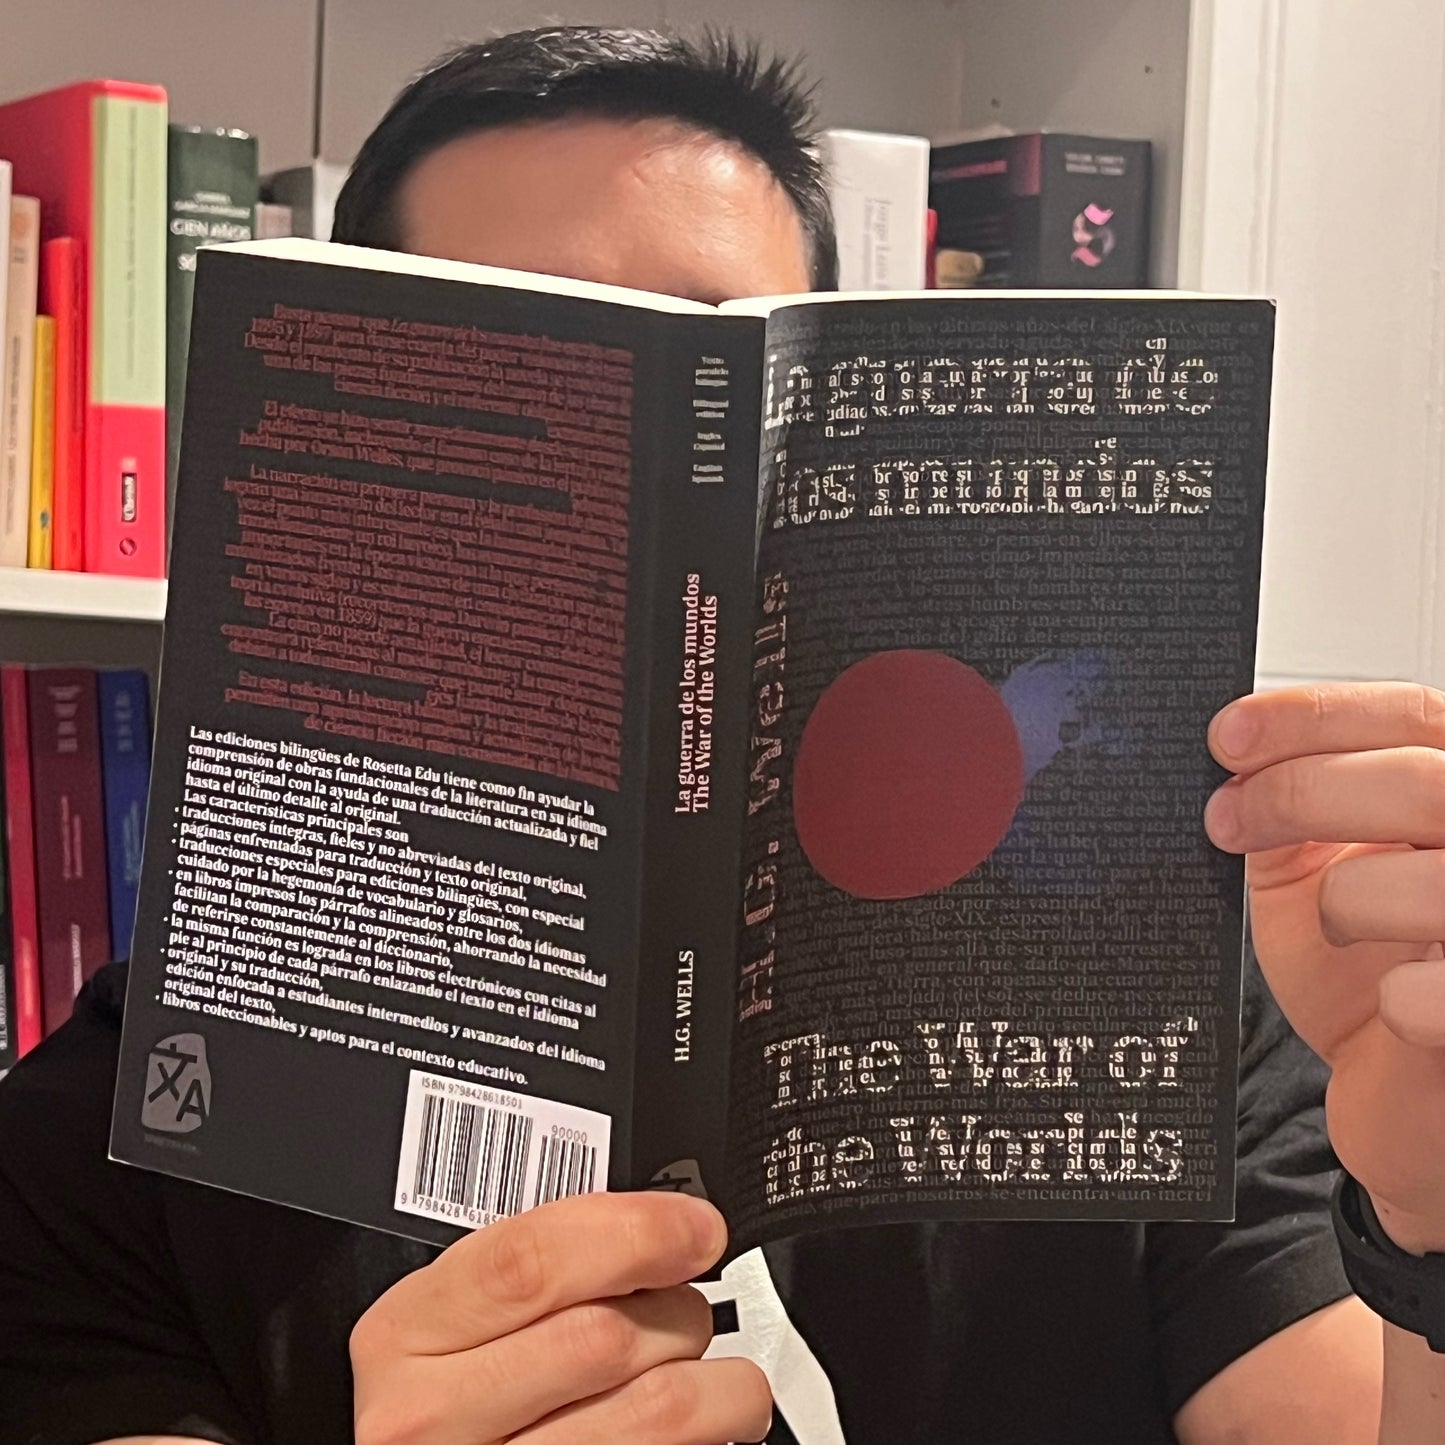 La guerra de los mundos - The War of the Worlds: Texto paralelo bilingüe - Bilingual edition: Inglés - Español / English - Spanish